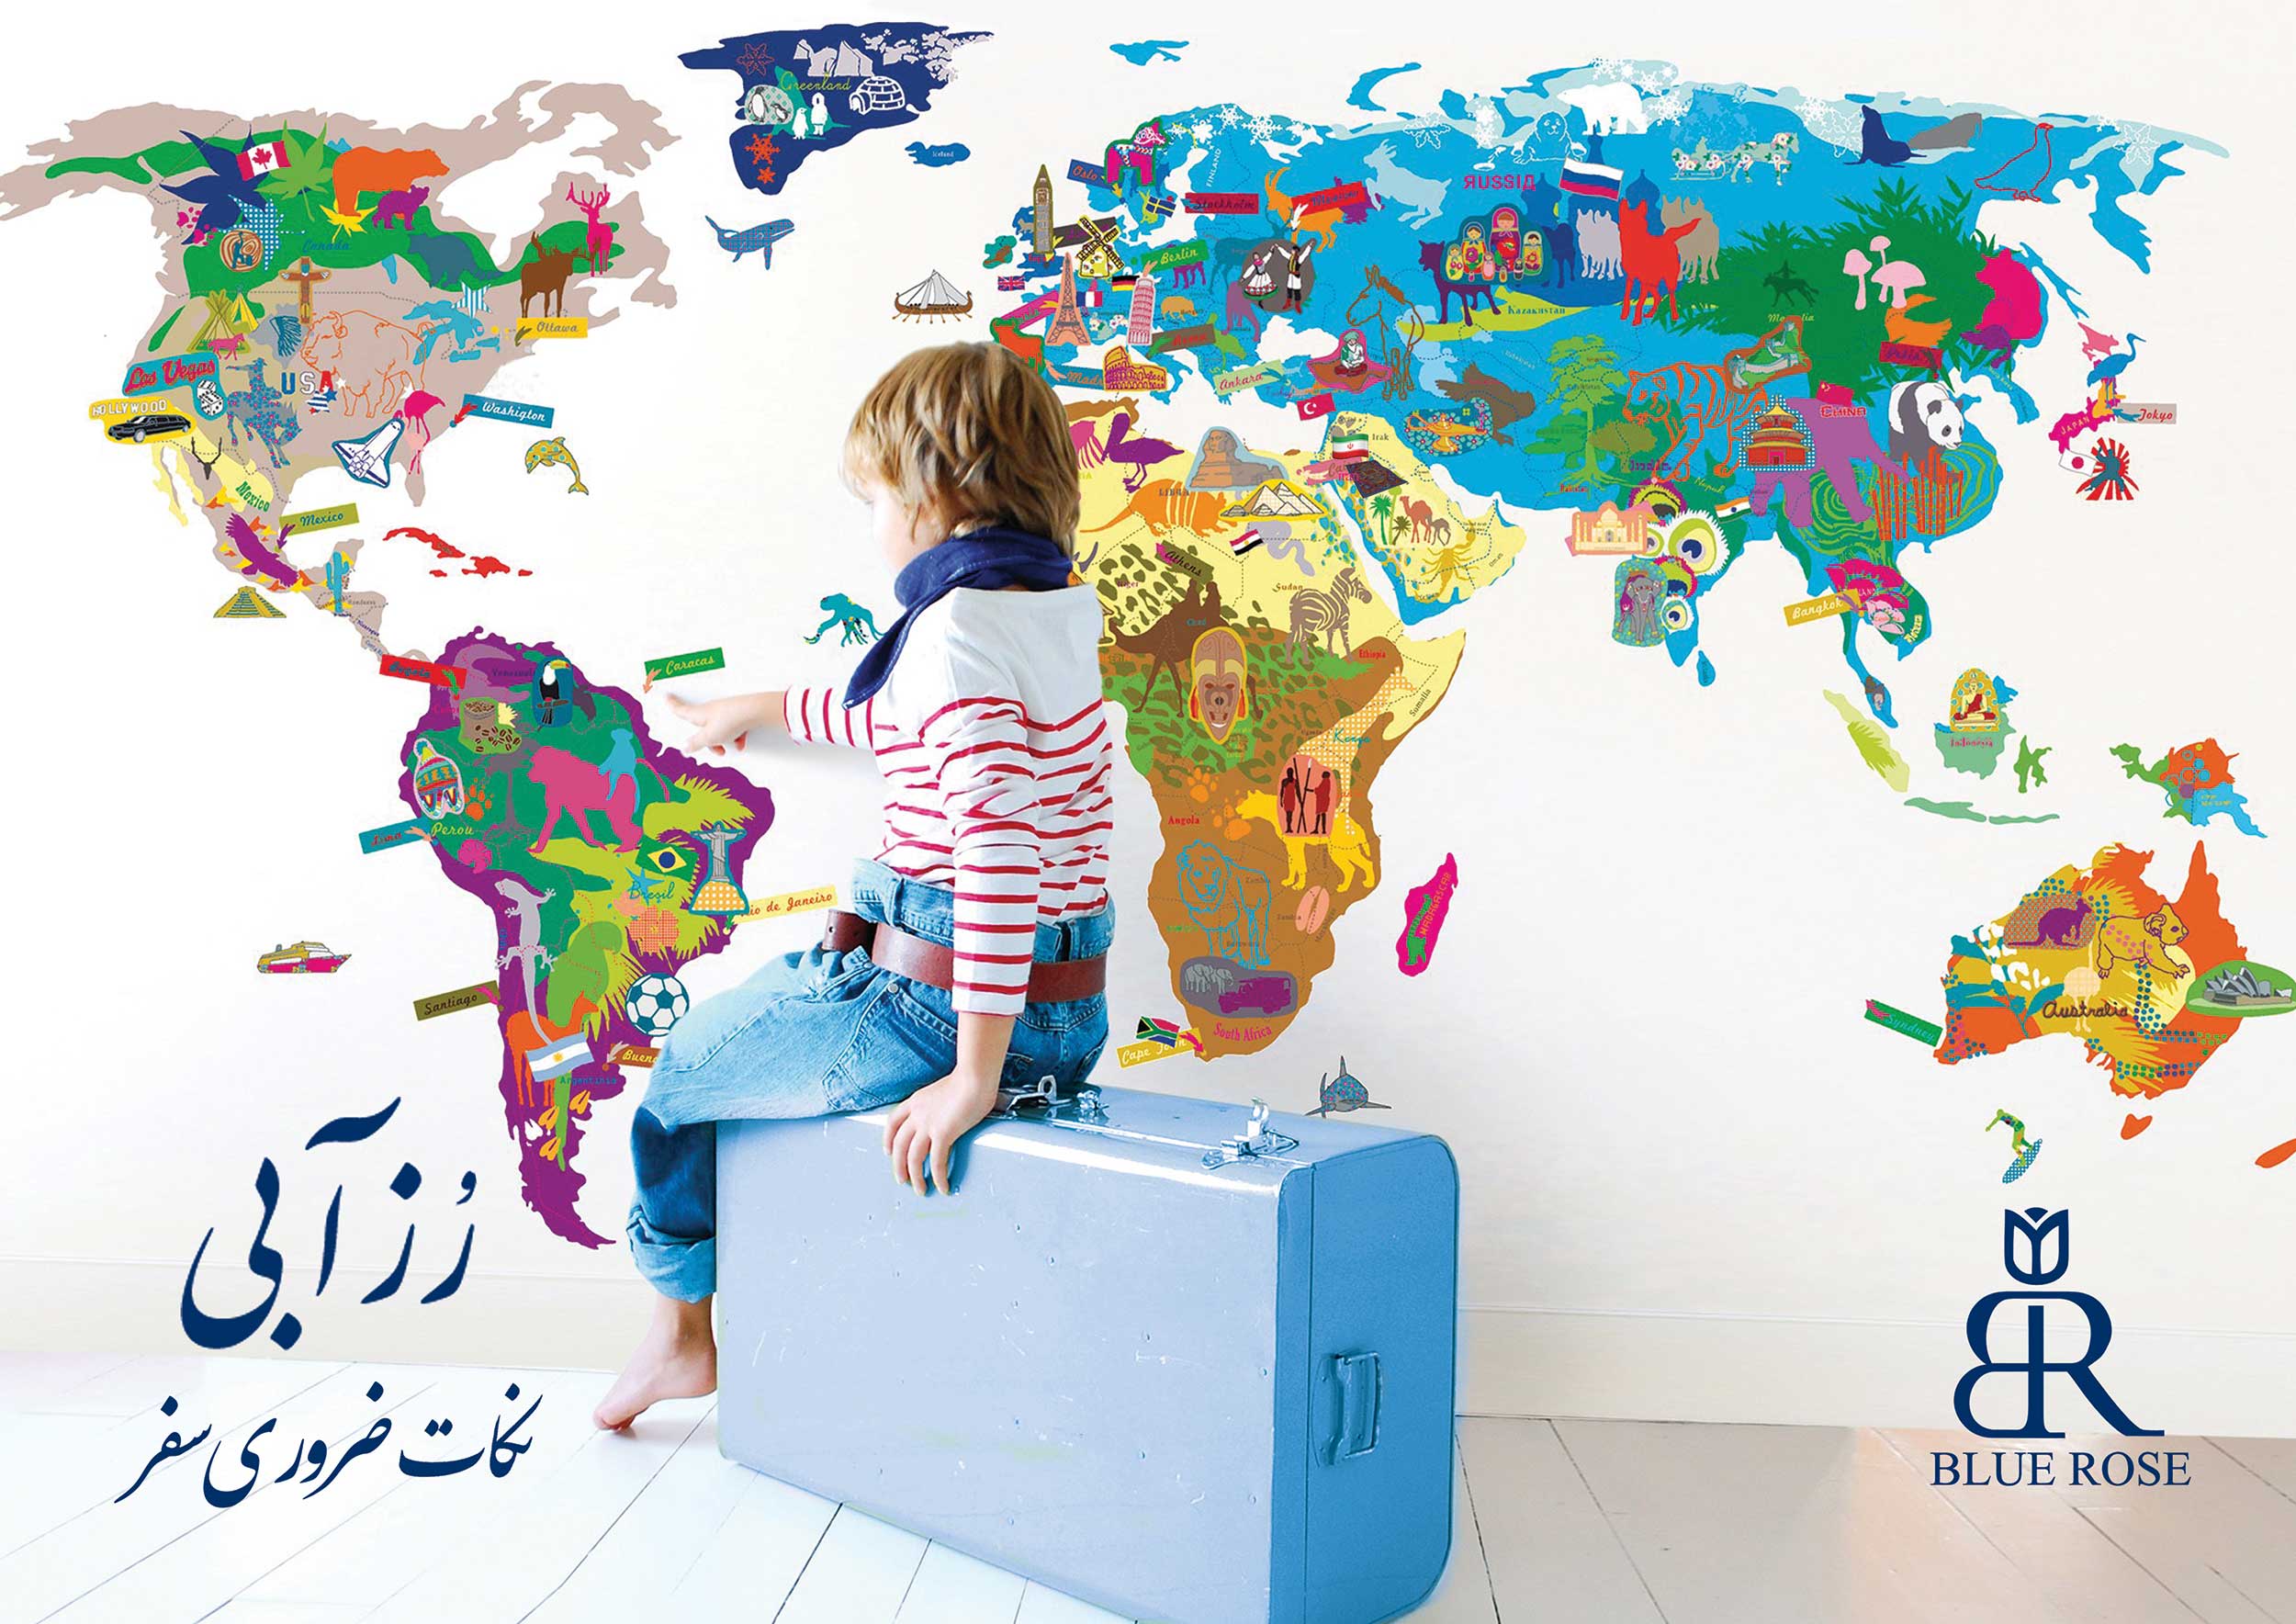 This is may is world. Путешествие по миру для детей. Путешествие с детьми. Путешествия по миру.